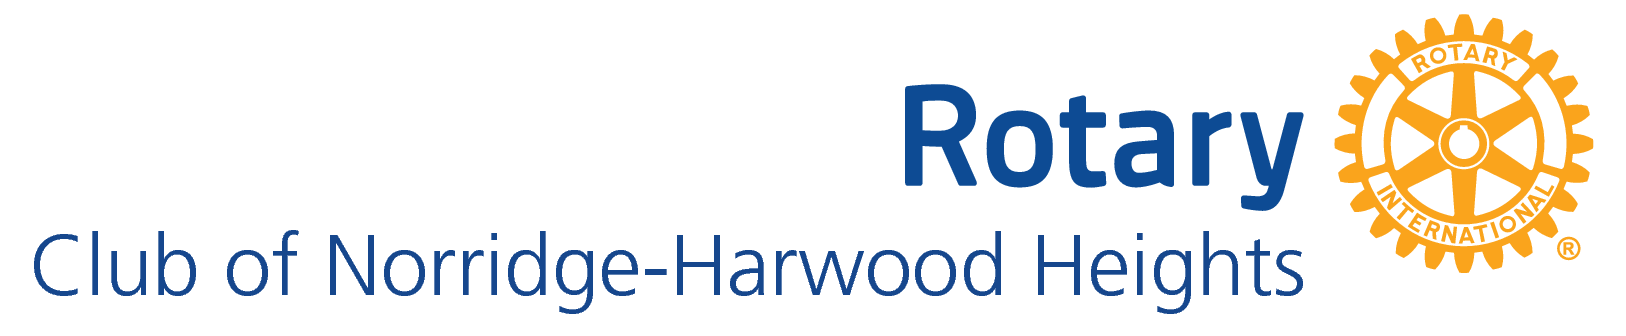 Rotary Club of Norridge-Harwood Heights